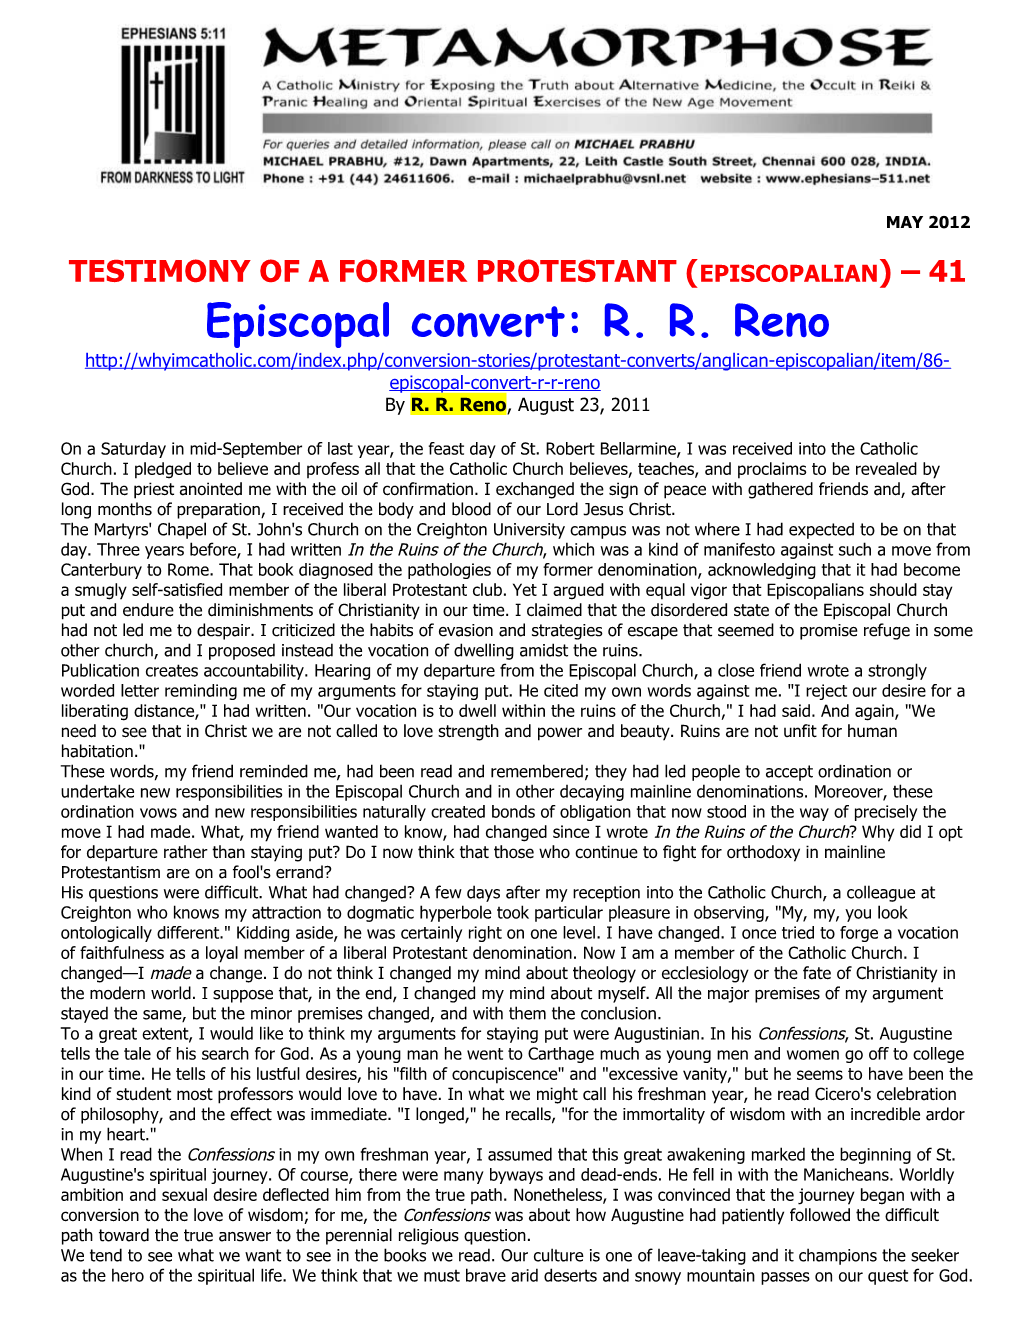 Testimony of a Former Protestant (Episcopalian) 41